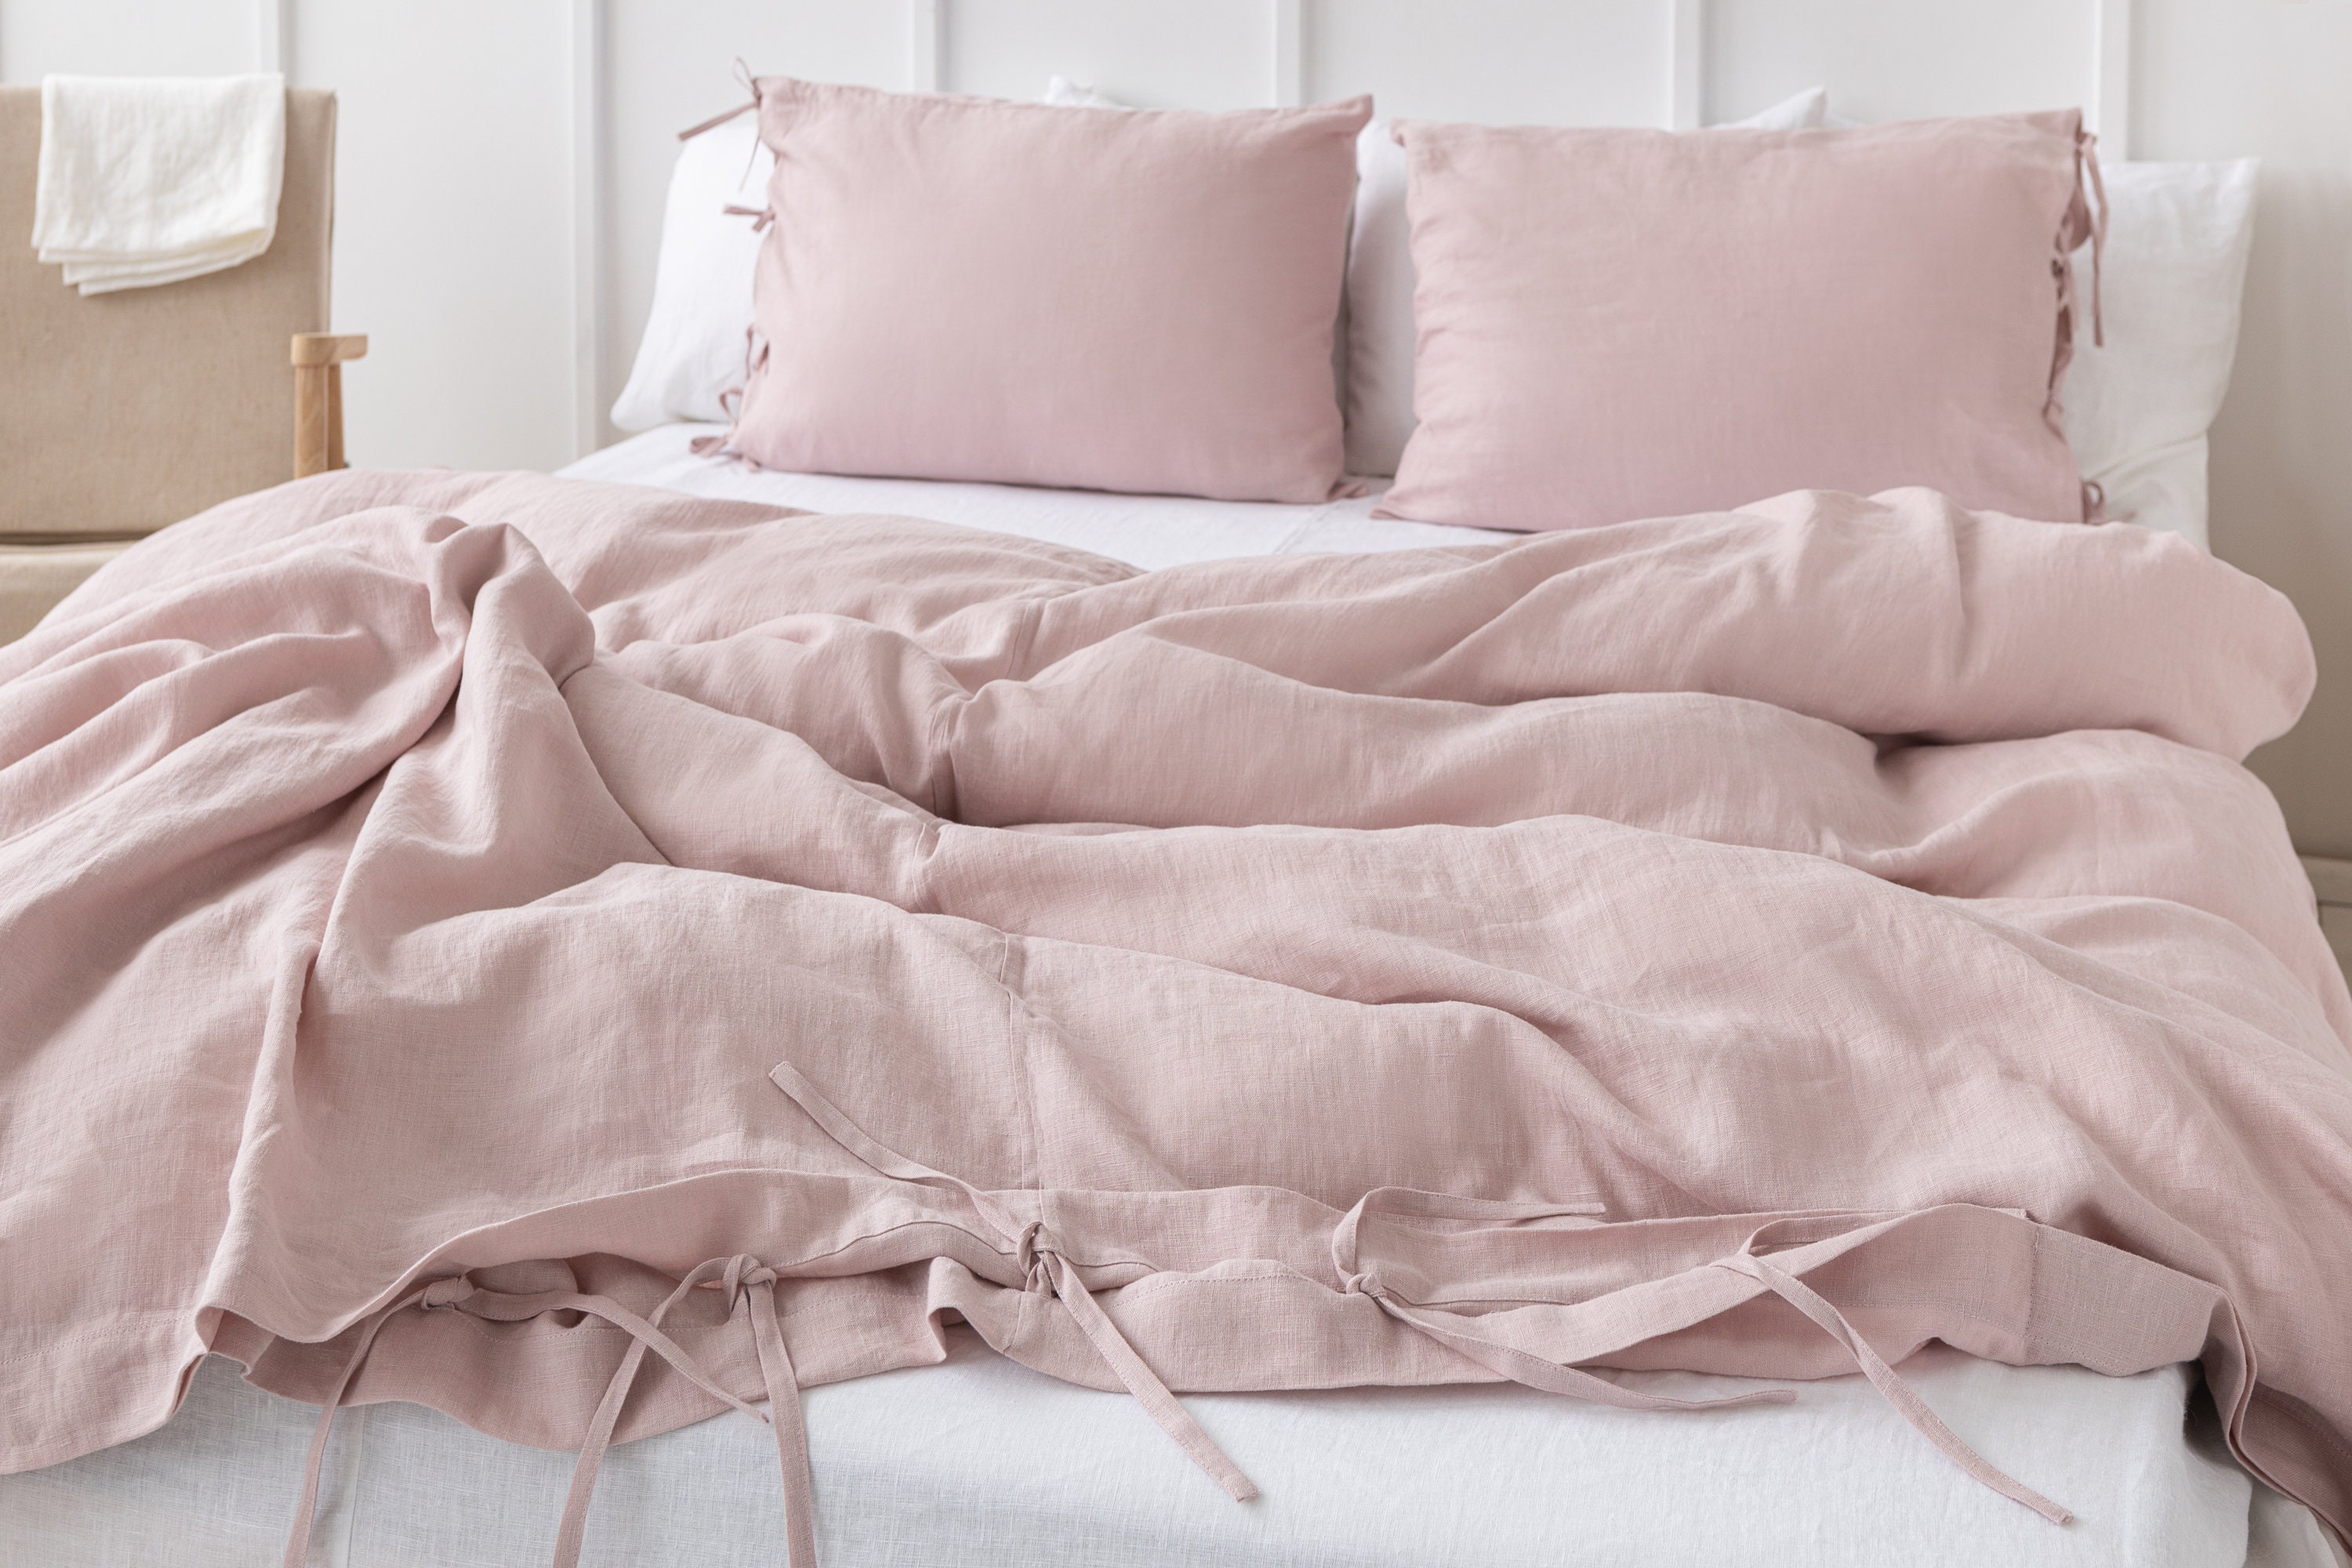 FREE SHIPPING Blush Pink Linen Duvet Cover Stunning 